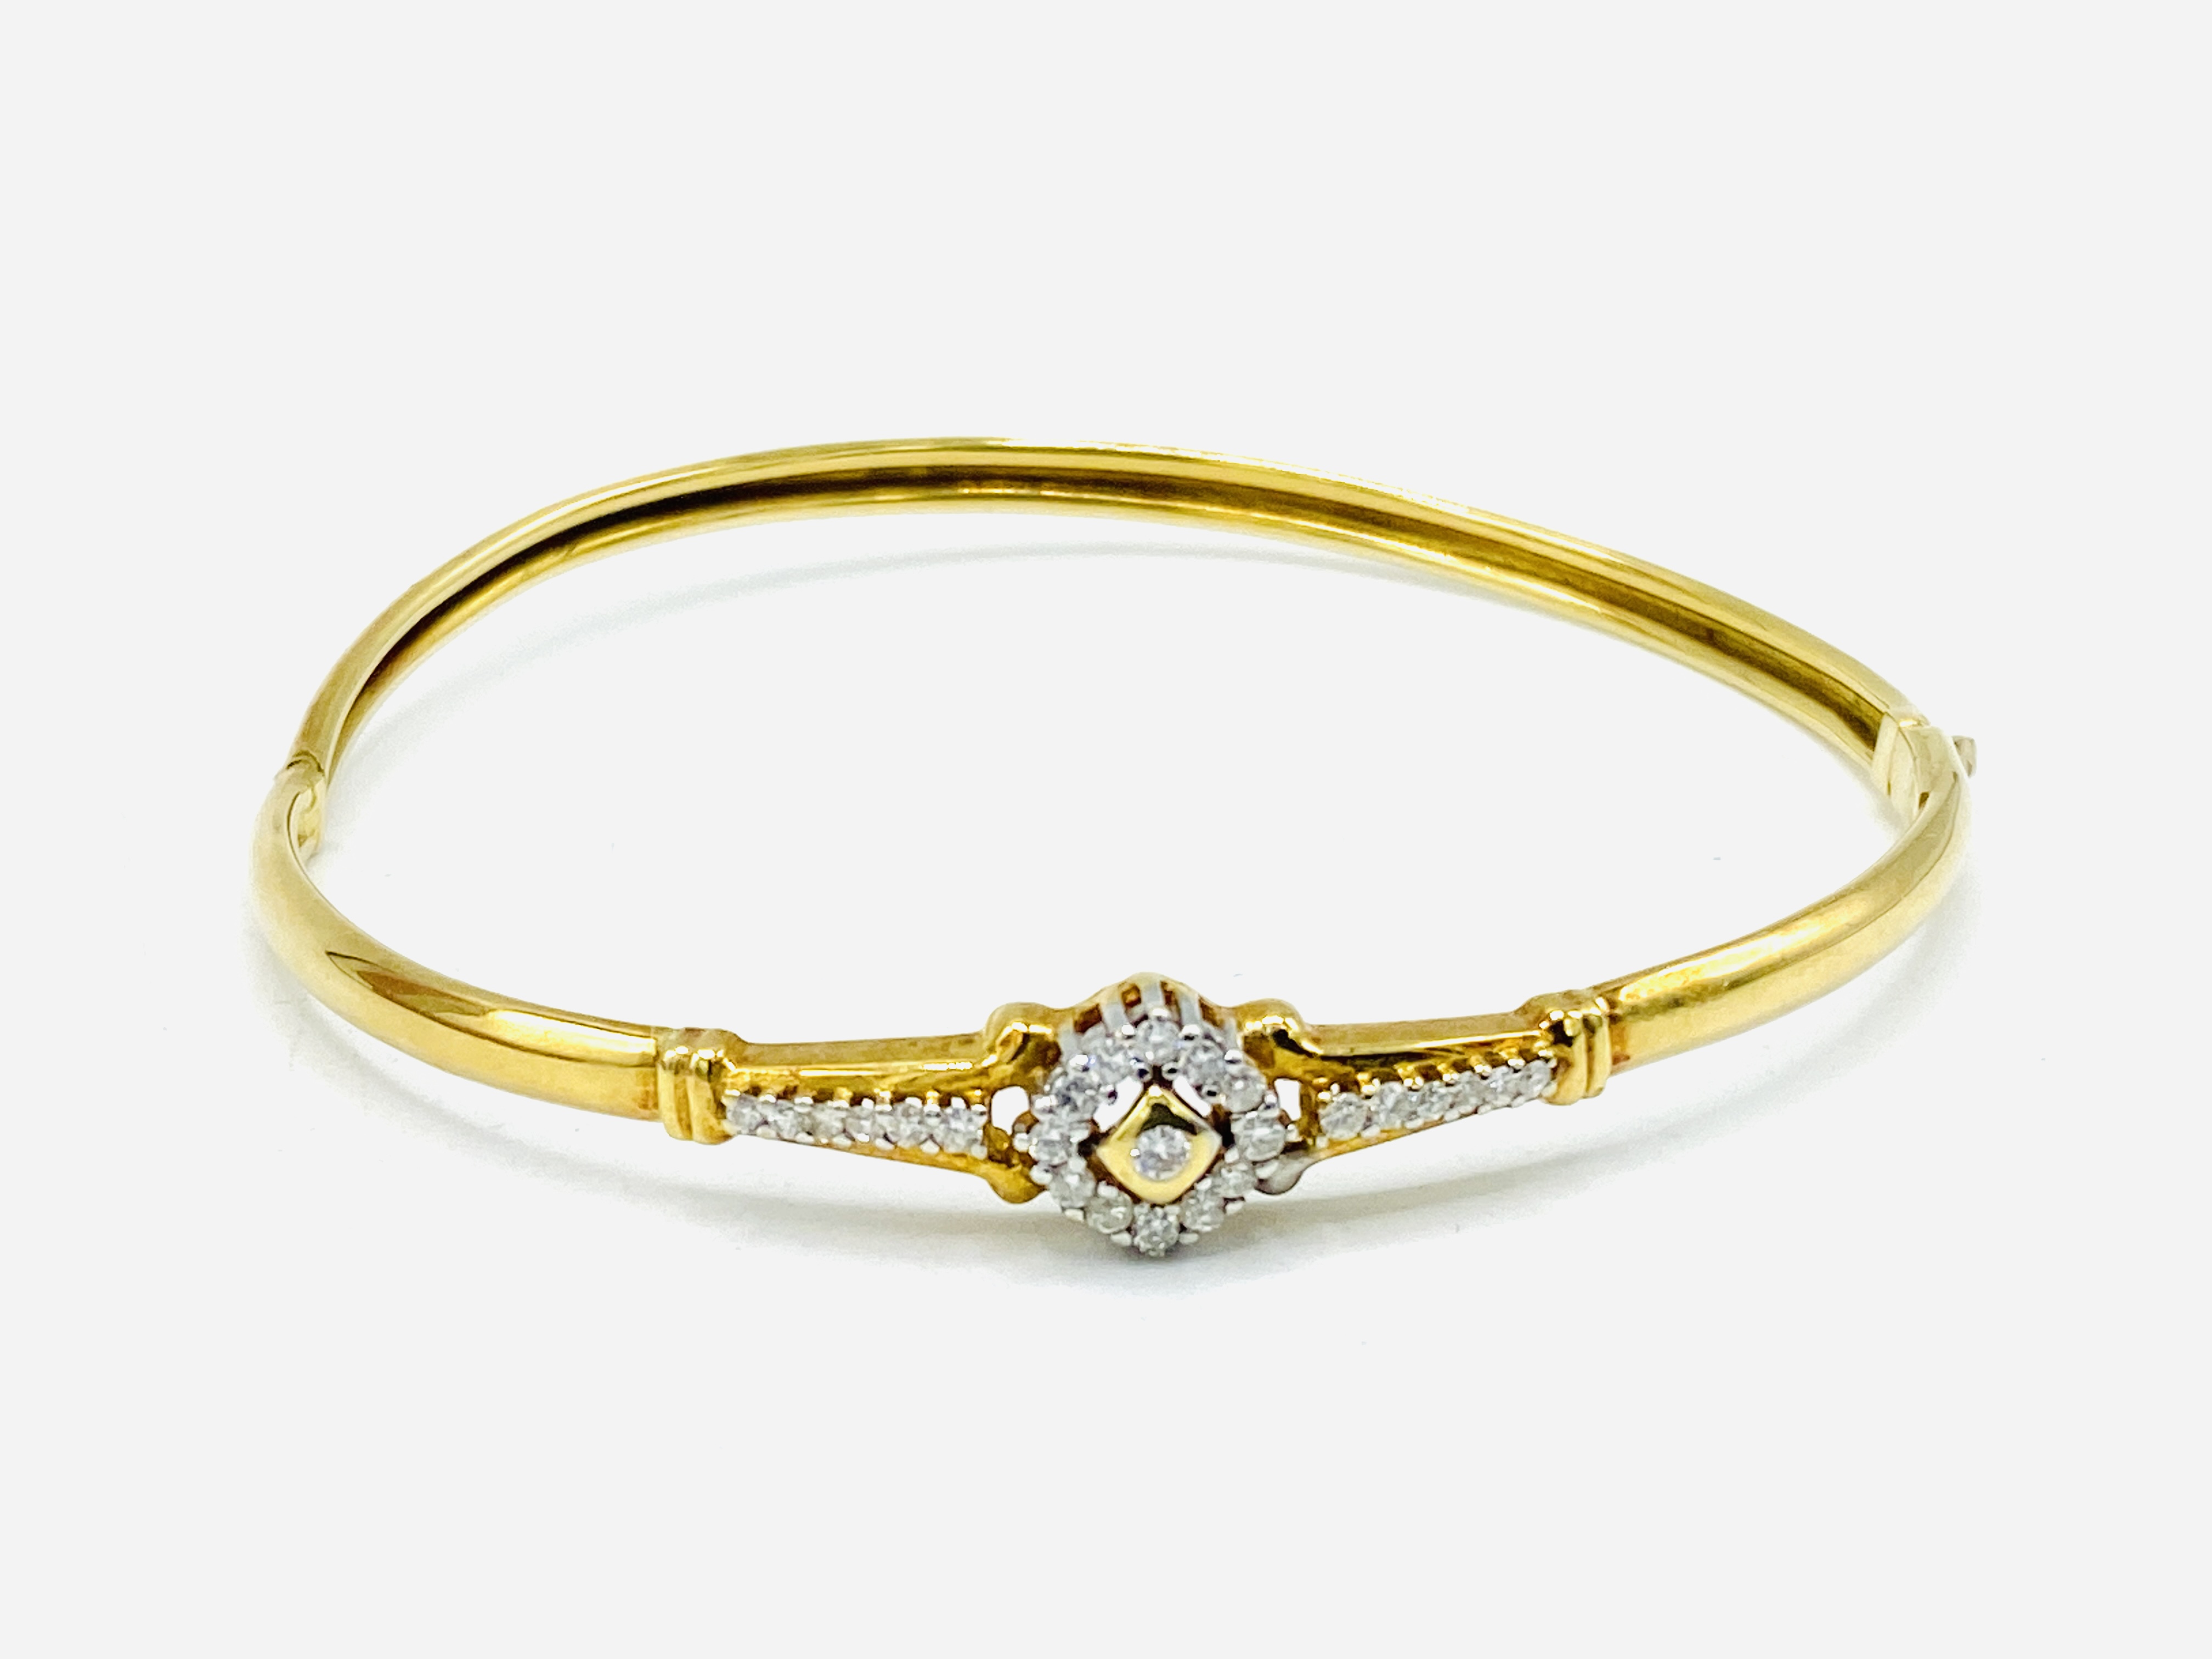 18ct gold and diamond bracelet - Image 4 of 4